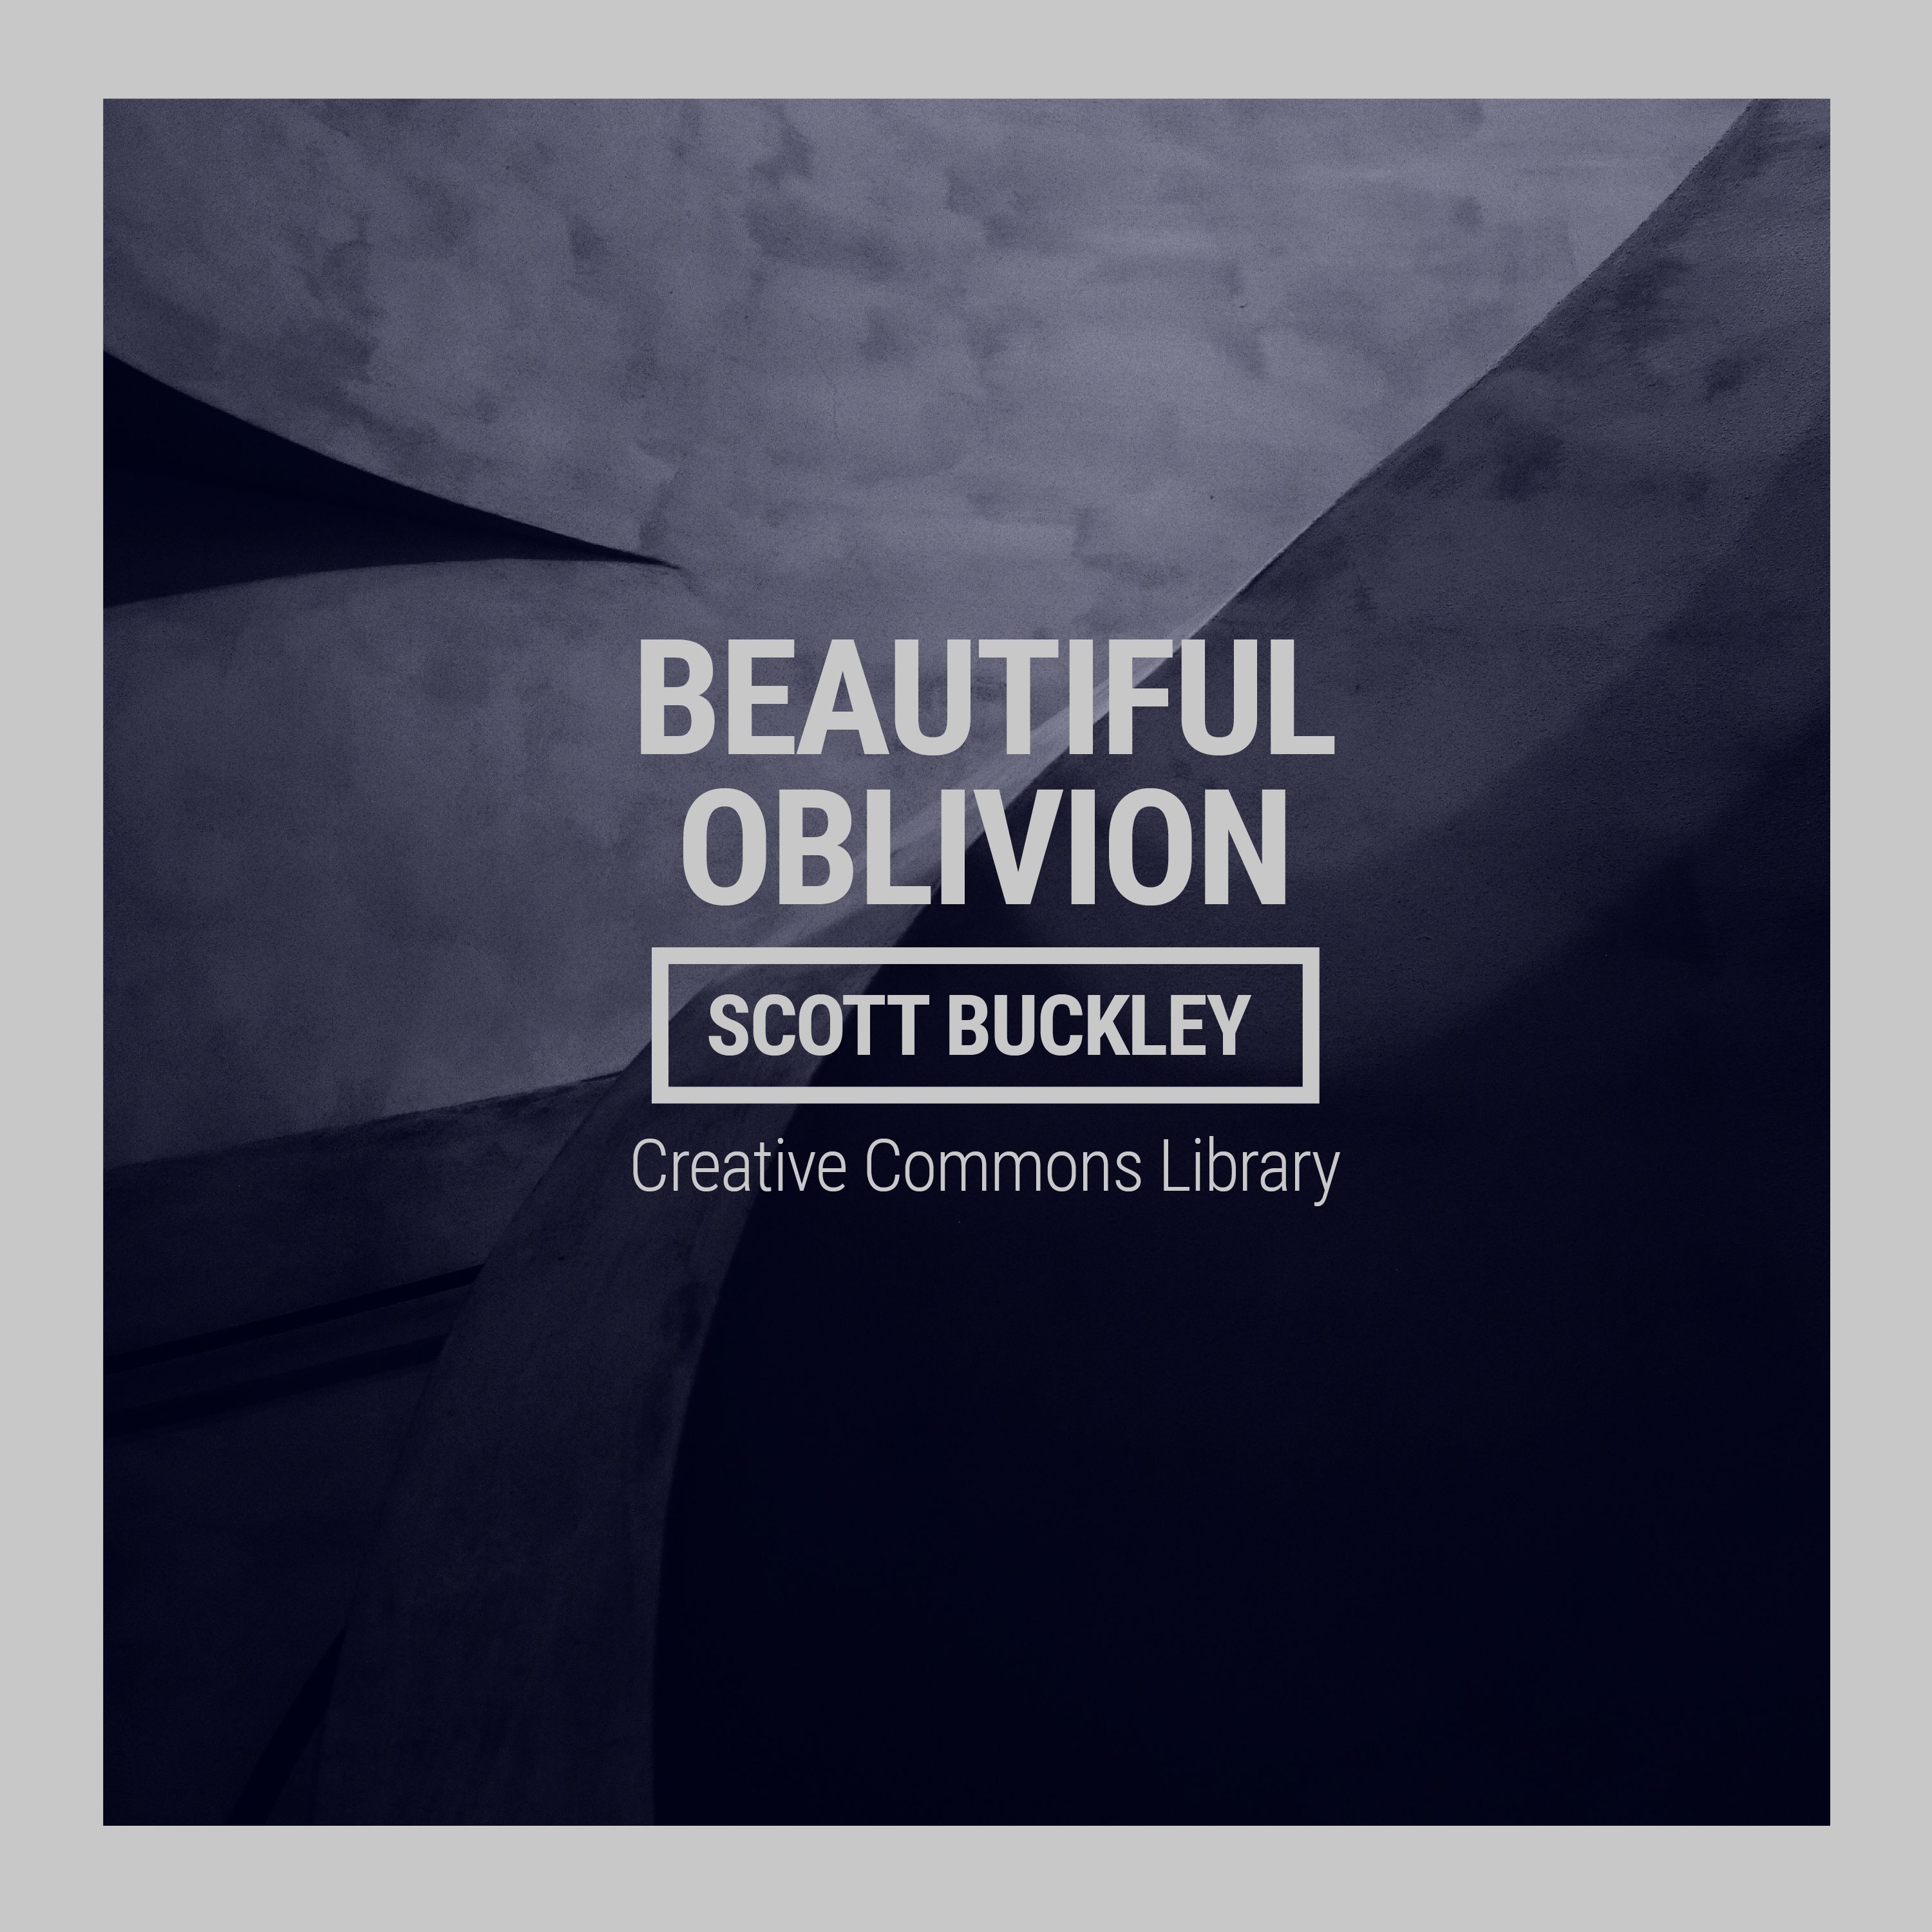 Preuzimanje datoteka Beautiful Oblivion (CC-BY)